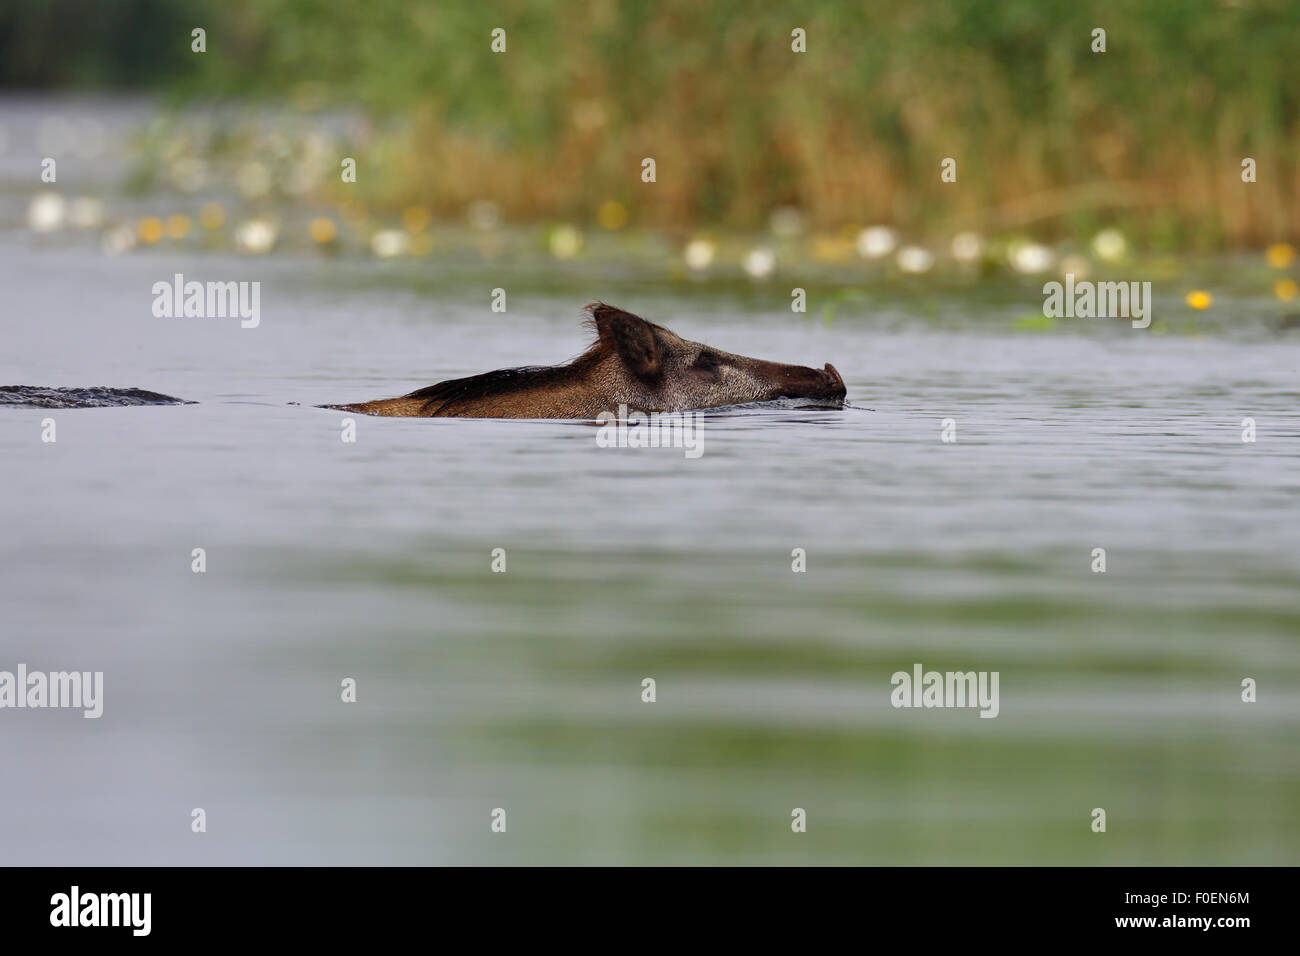 Il cinghiale (Sus scrofa) nuotare in acqua, Meclemburgo, Pomerania Occidentale, Germania Foto Stock